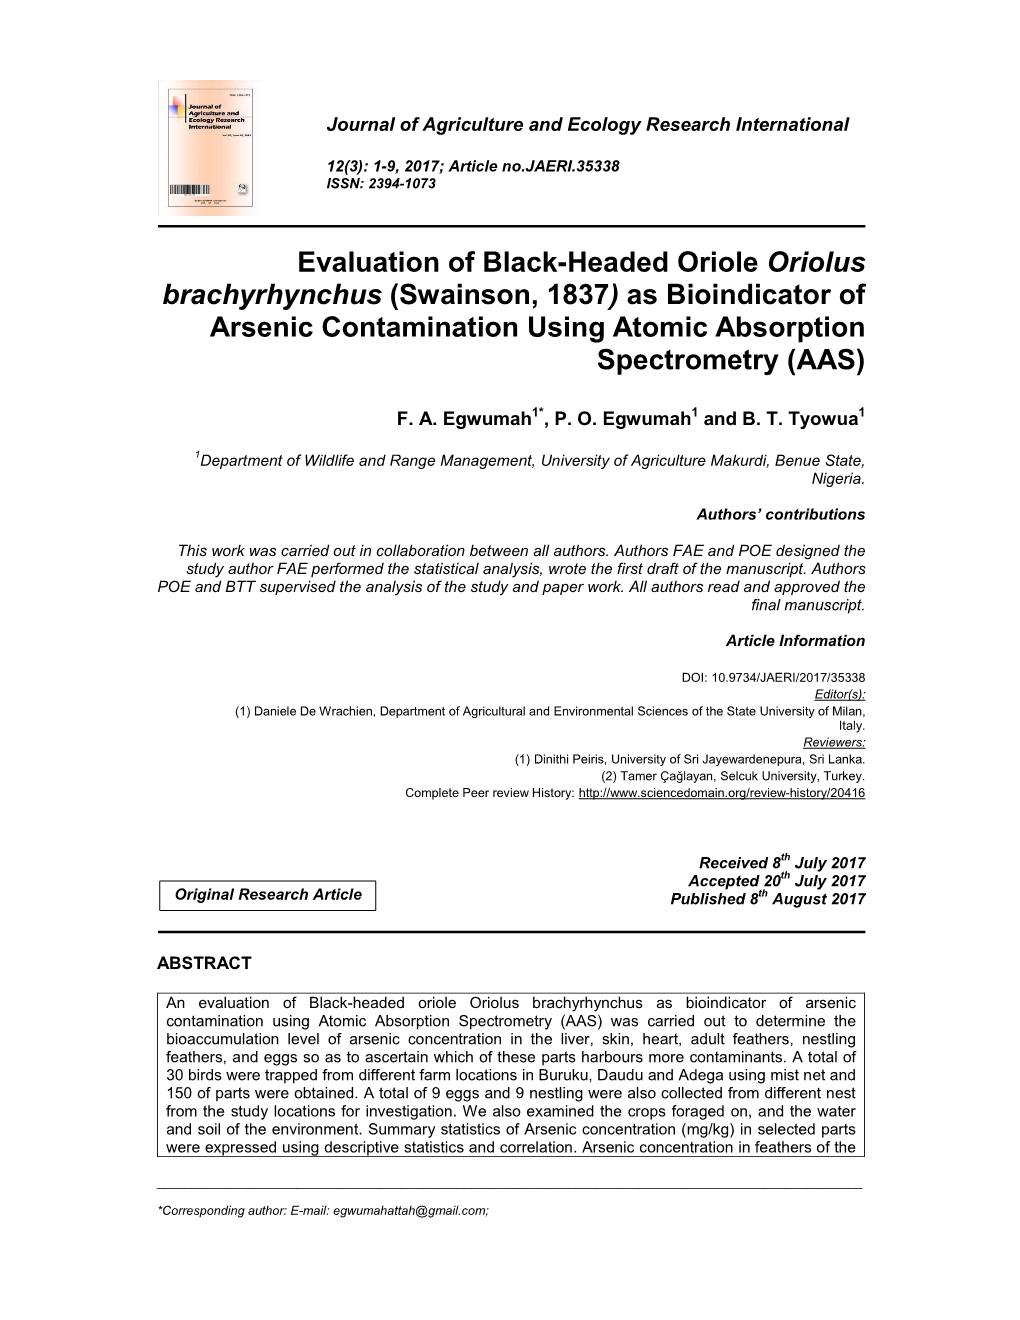 Evaluation of Black-Headed Oriole Oriolus Brachyrhynchus (Swainson, 1837) As Bioindicator of Arsenic Contamination Using Atomic Absorption Spectrometry (AAS)